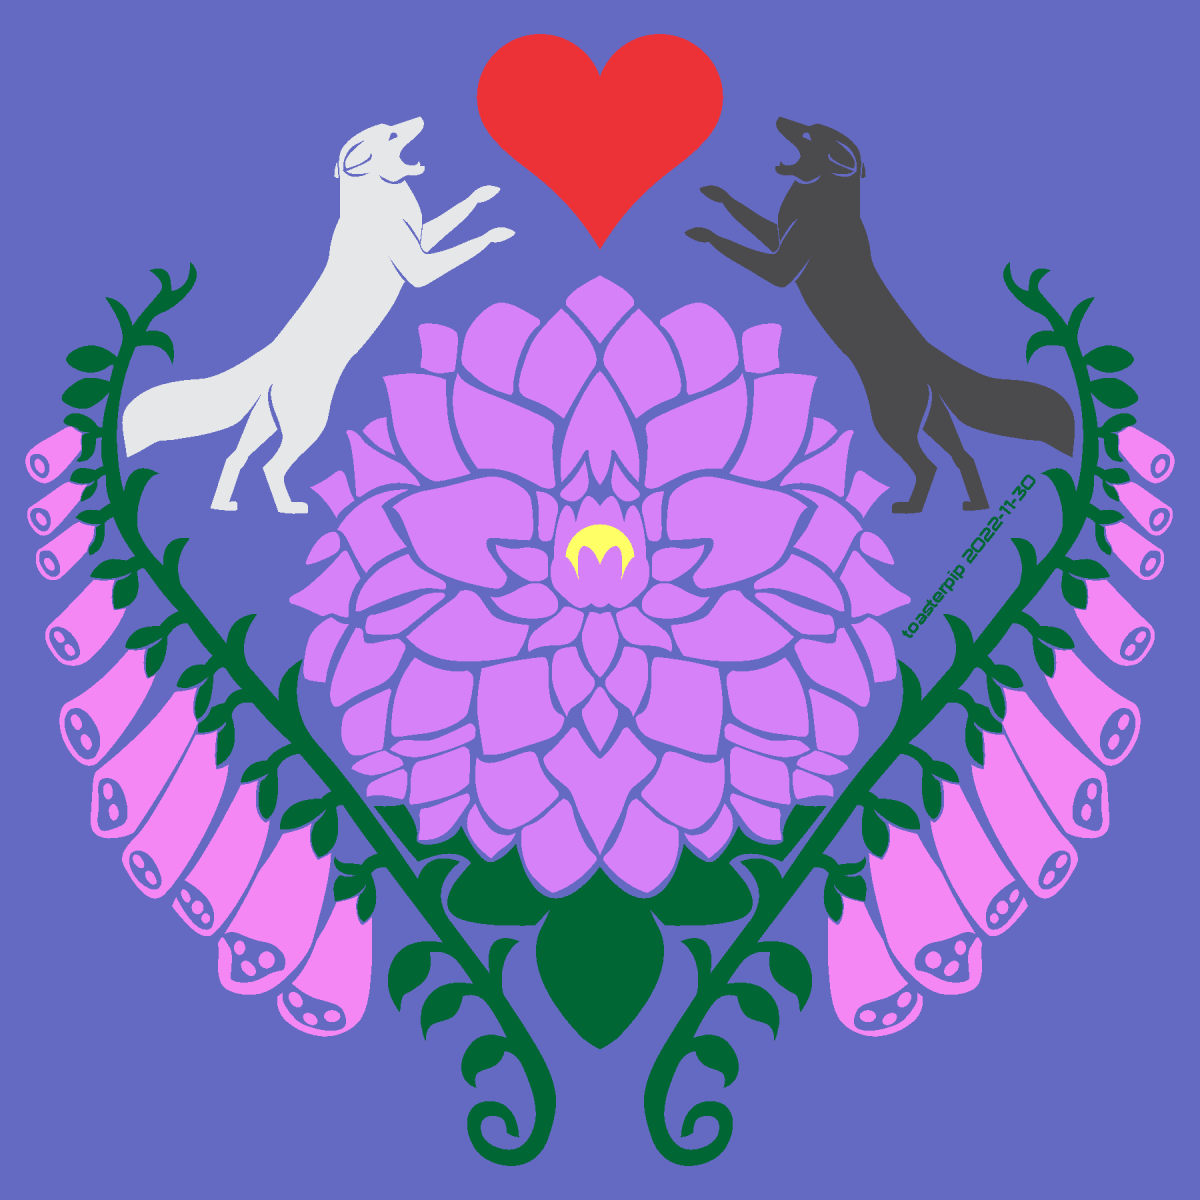 toasterpip design furry emblem crest fox foxglove laurels dahlia flowers floral